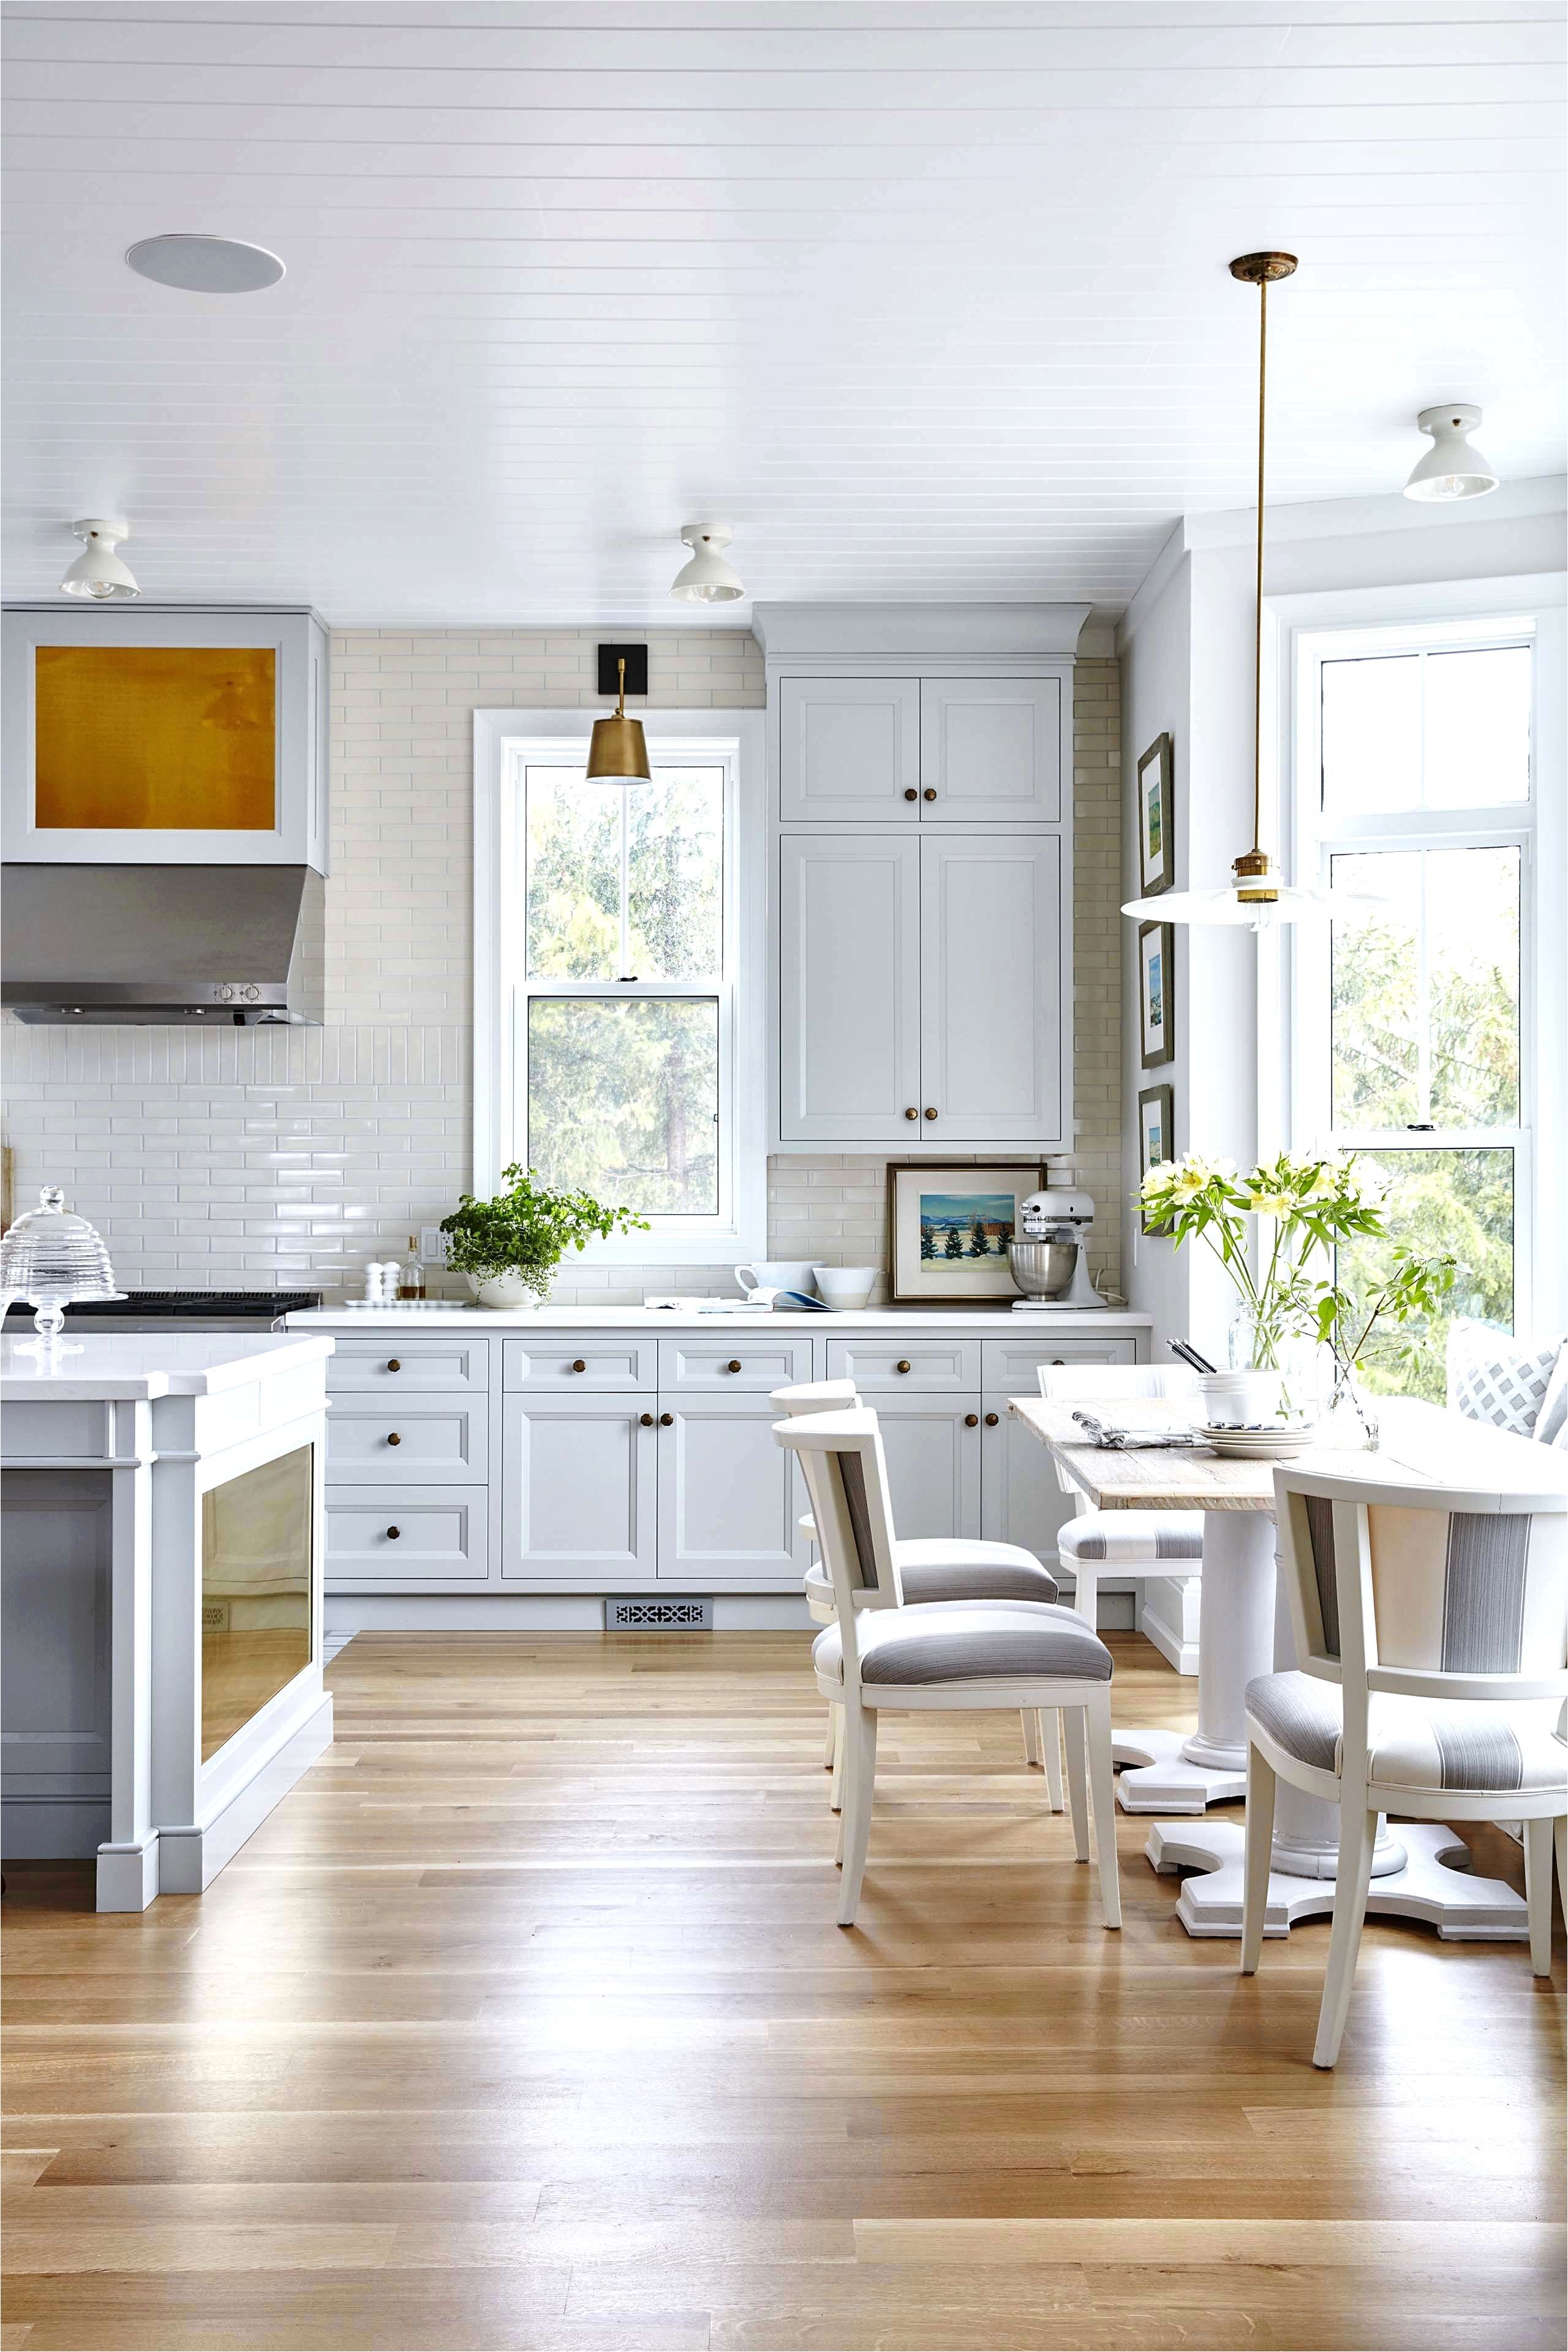 Home Interior Light Bars 38 Luxury Kitchen Chandelier Ideas Inspiring Home Decor